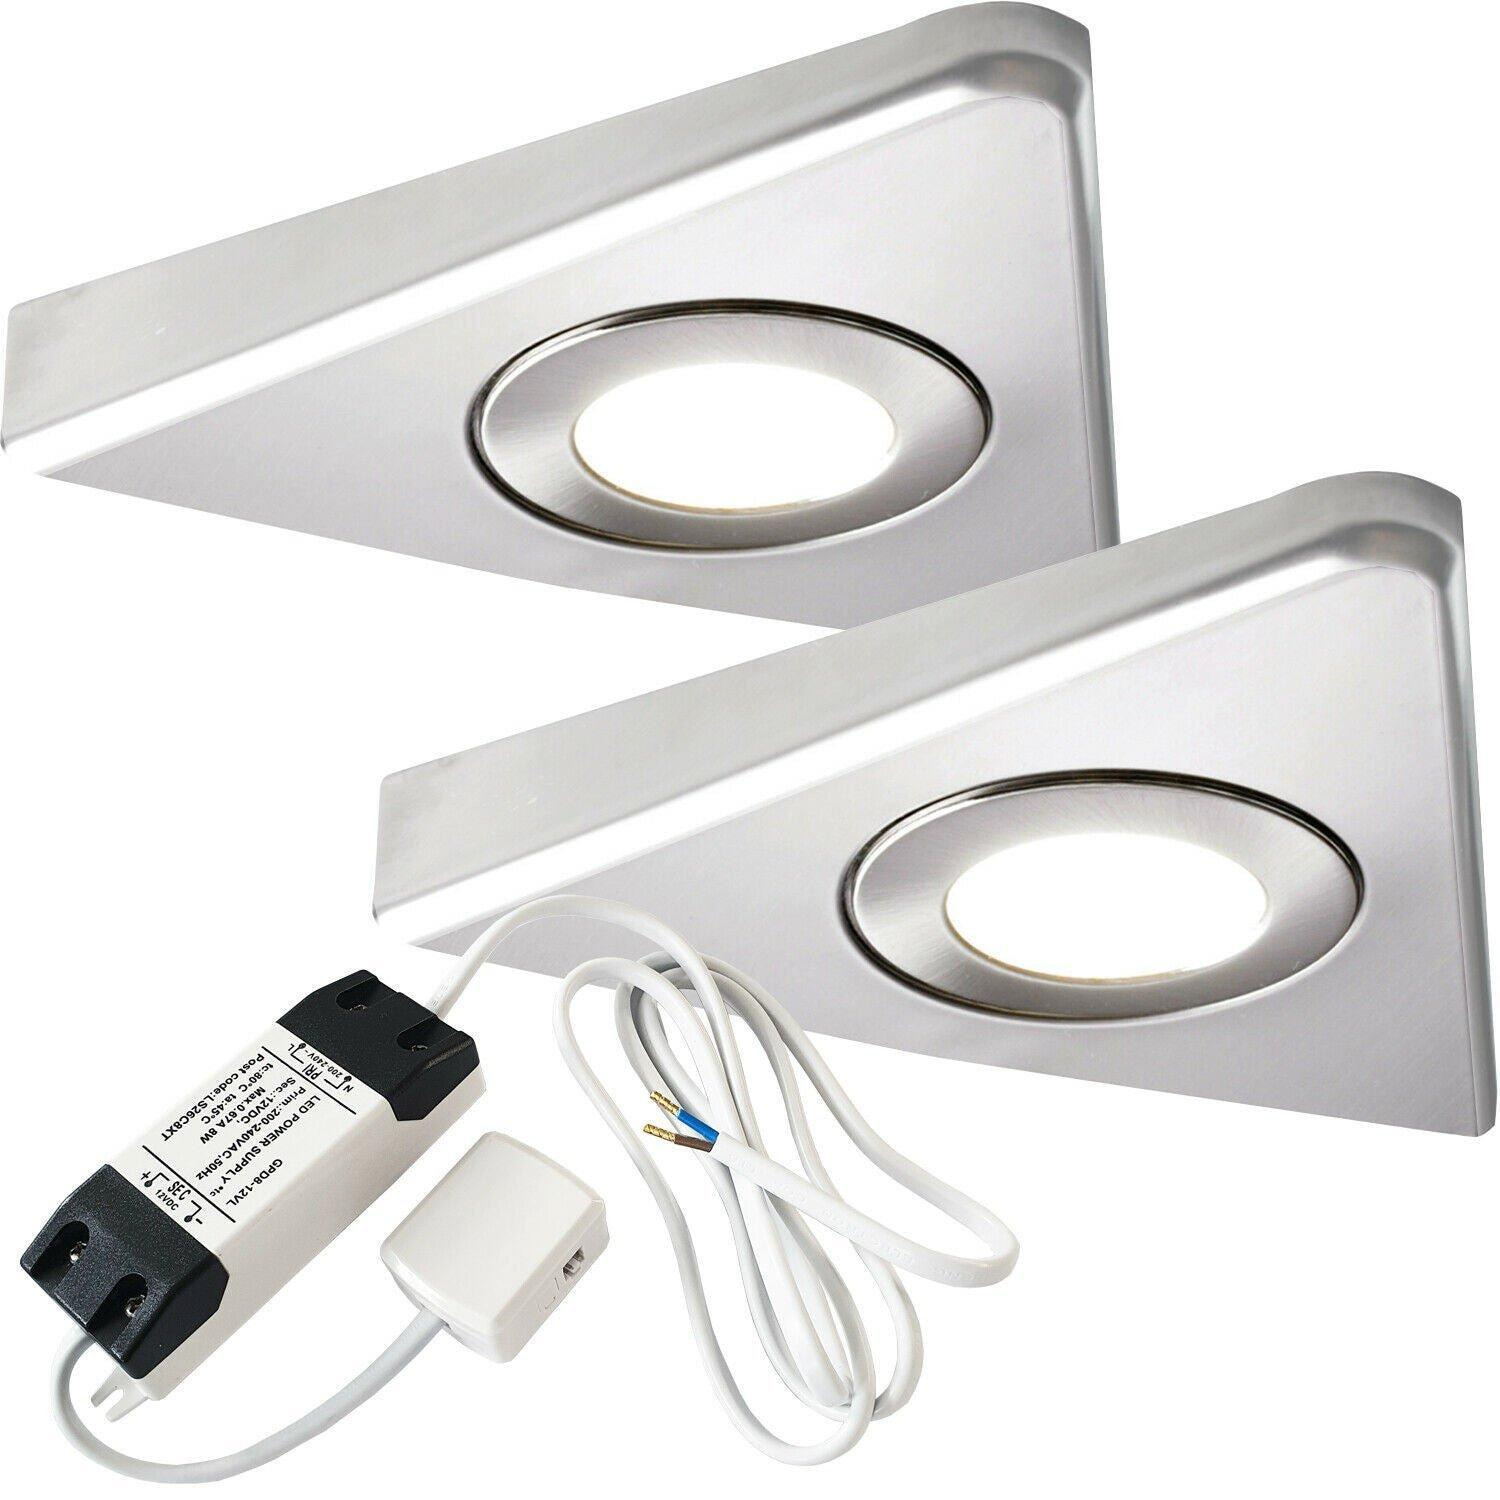 2x BRUSHED NICKEL Triangle Surface Under Cabinet Kitchen Light & Driver Kit - Natural White LED - image 1